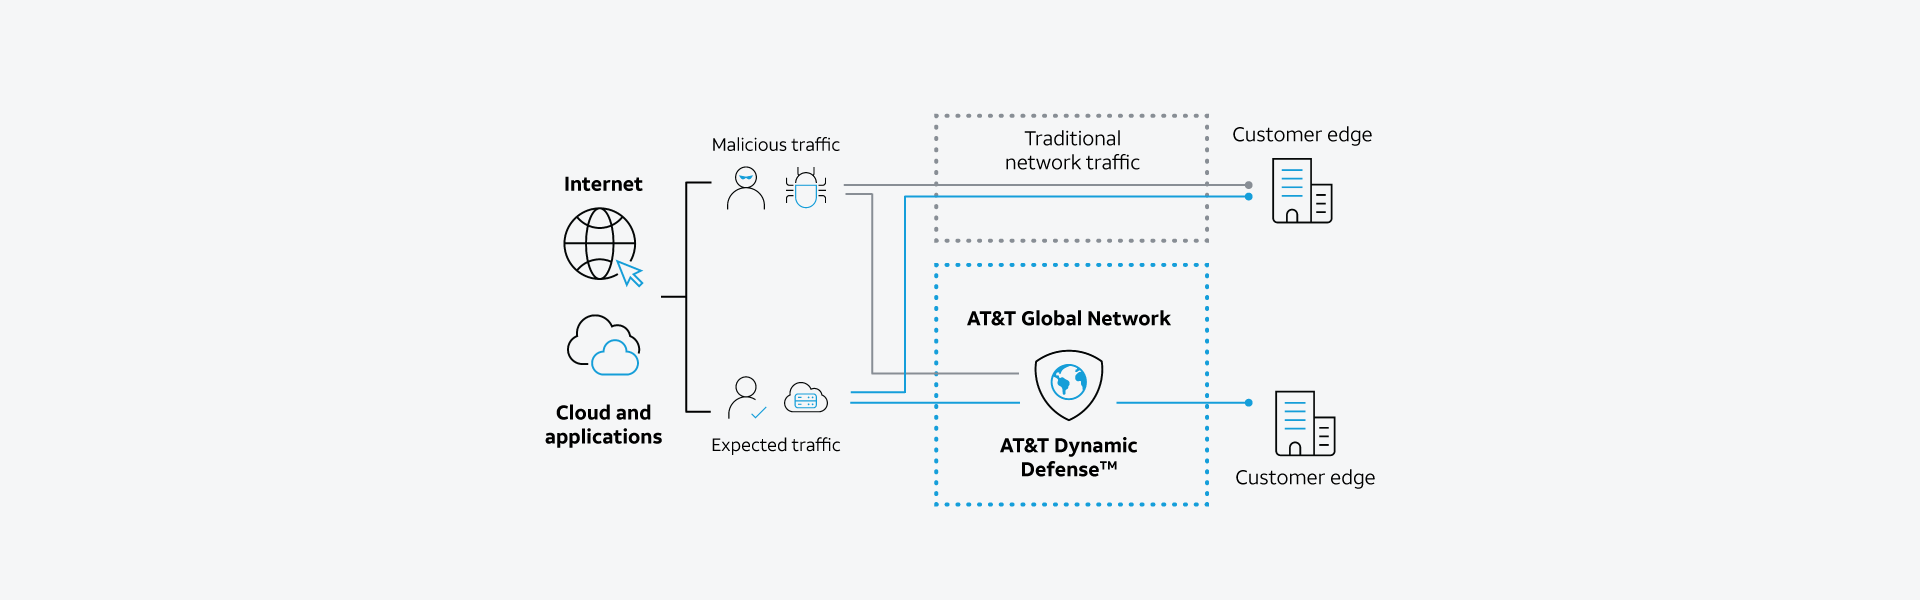 AT&T Dynamic Defense secure threat blocking illustration